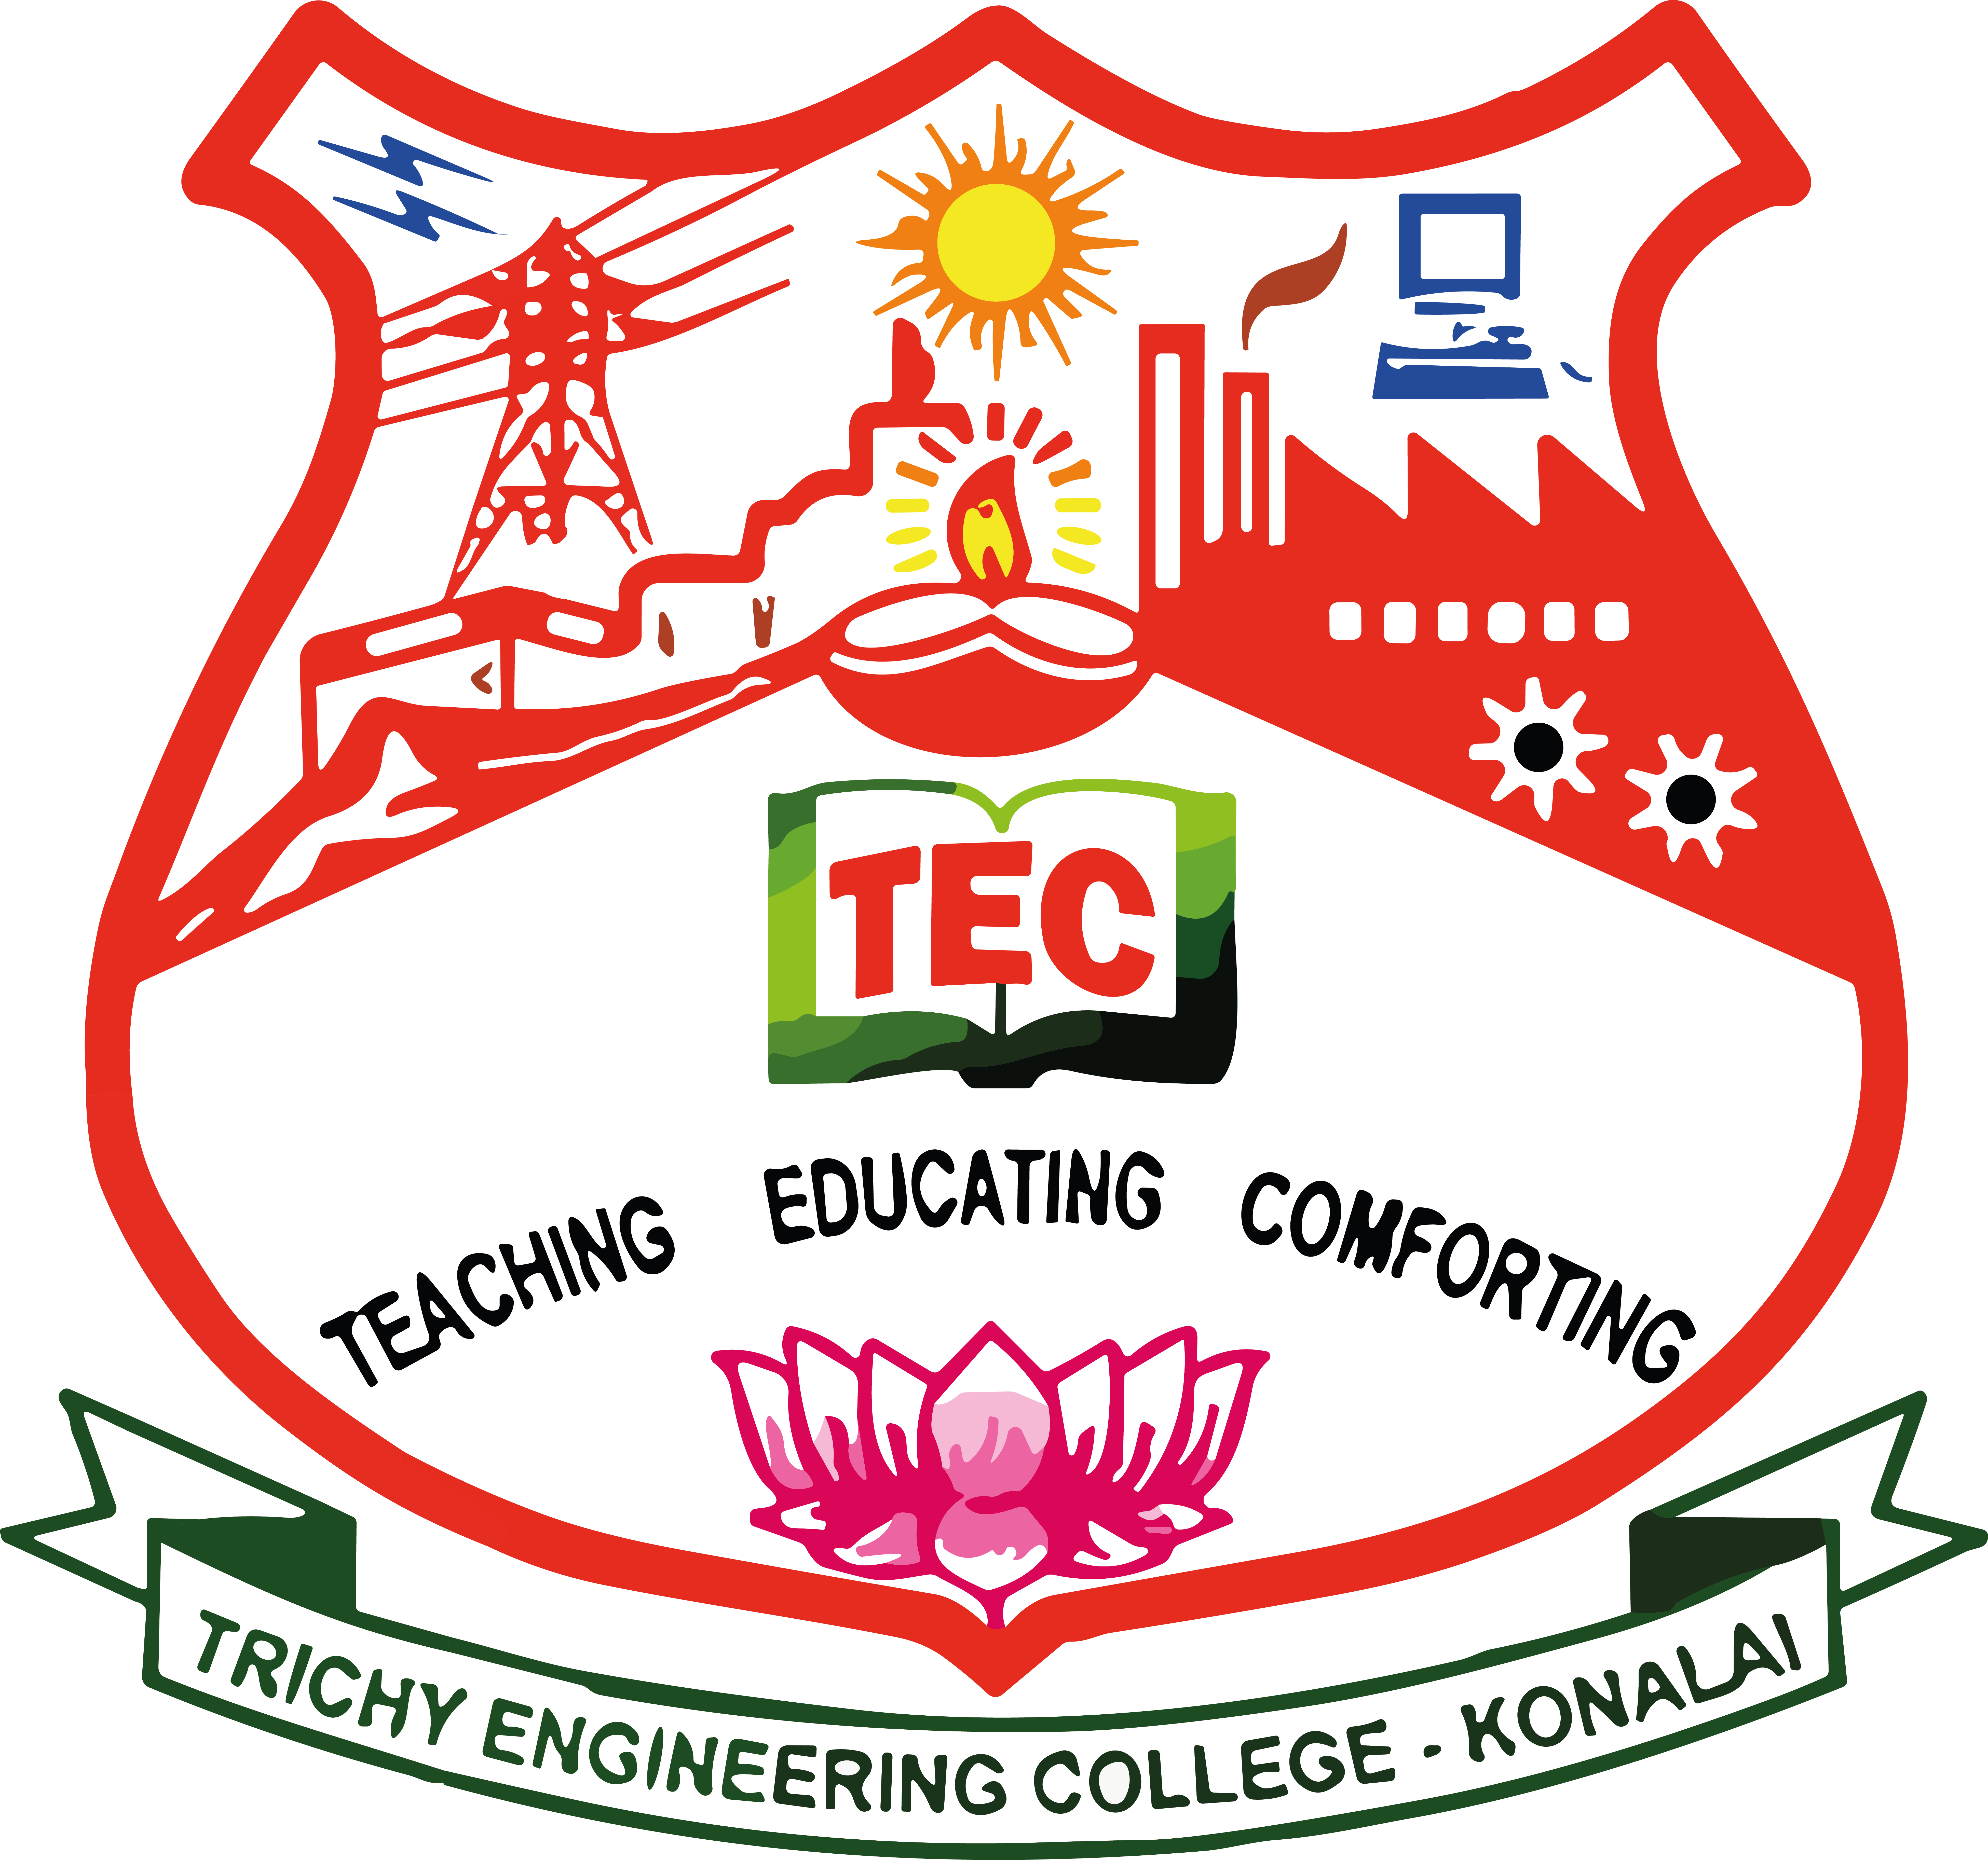 Trichy Engineering College Logo